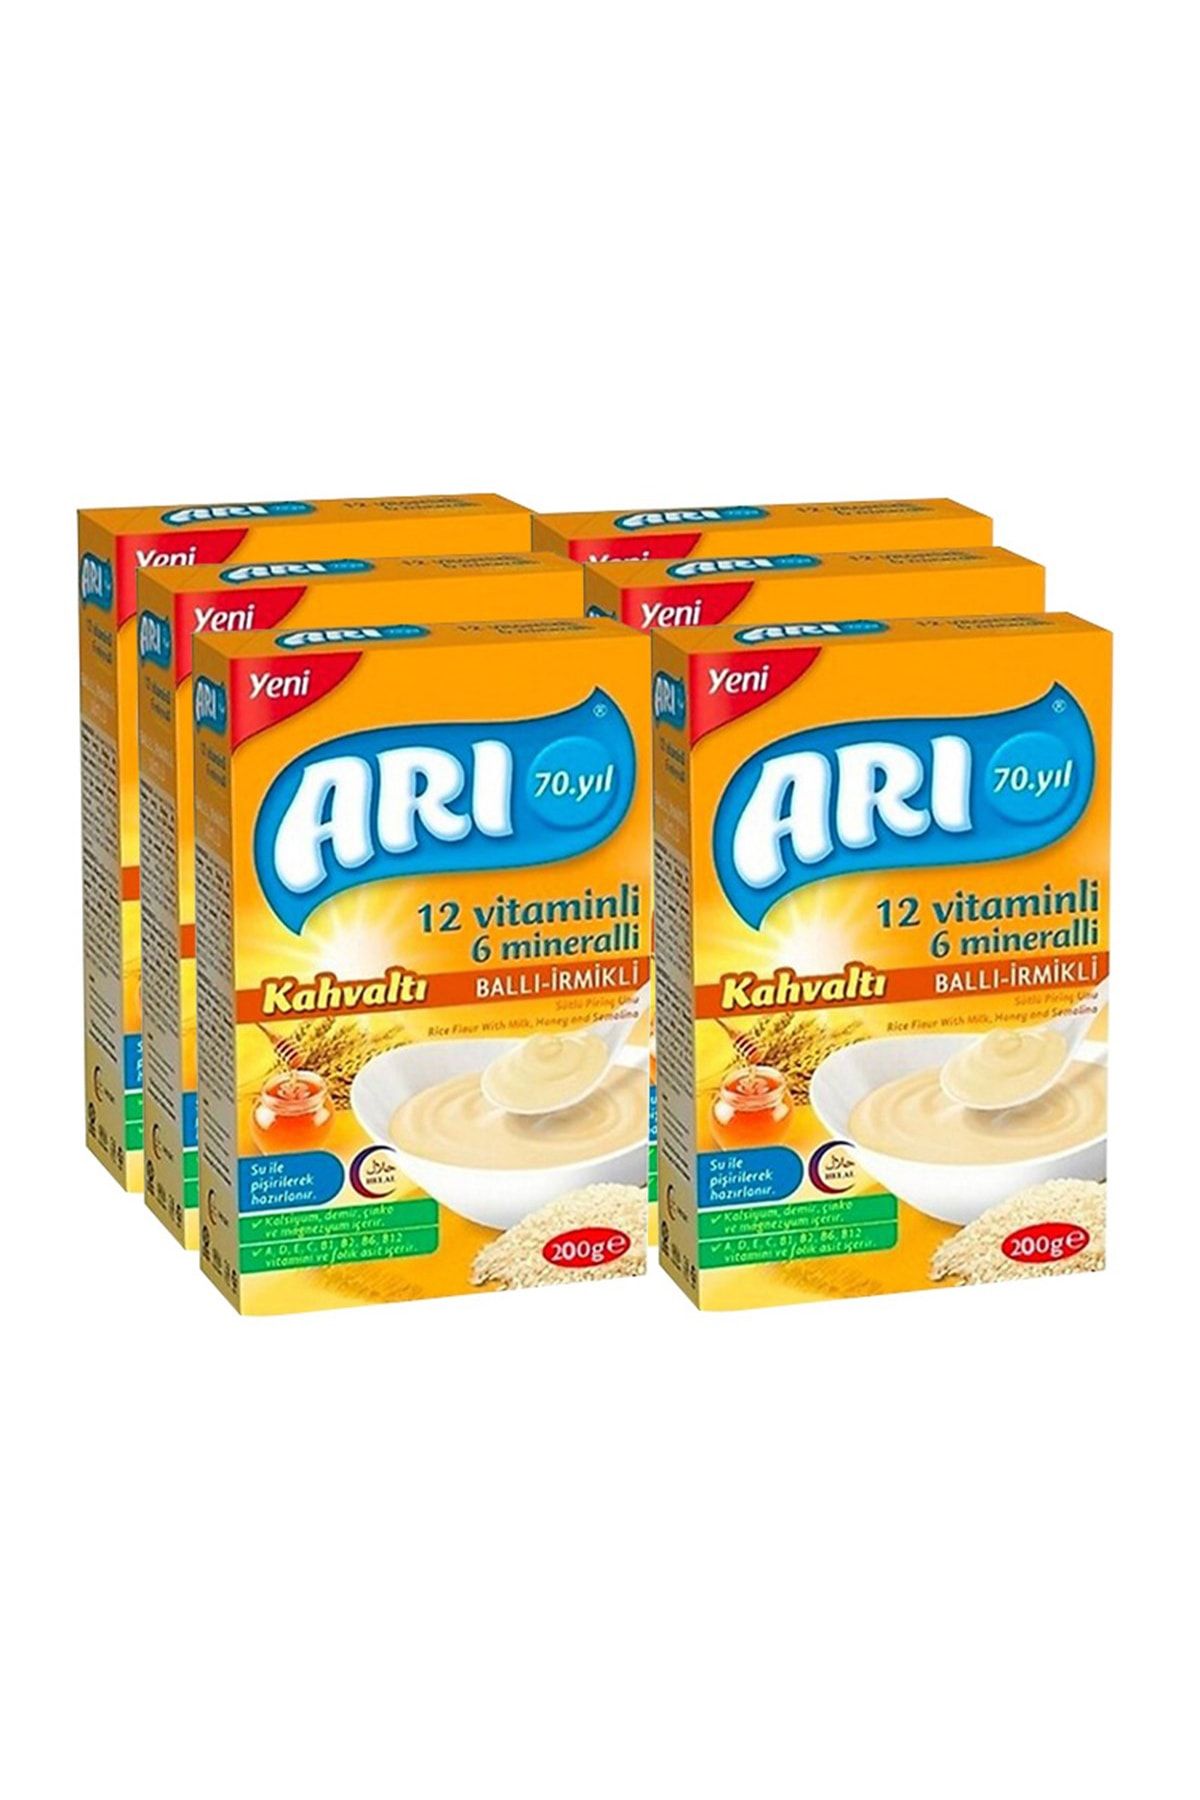 ARI 12 Vitaminli 6 Minarelli Sütlü Ballı Irmikli Pirinç Unu 200 Gr X 6'lı Paket